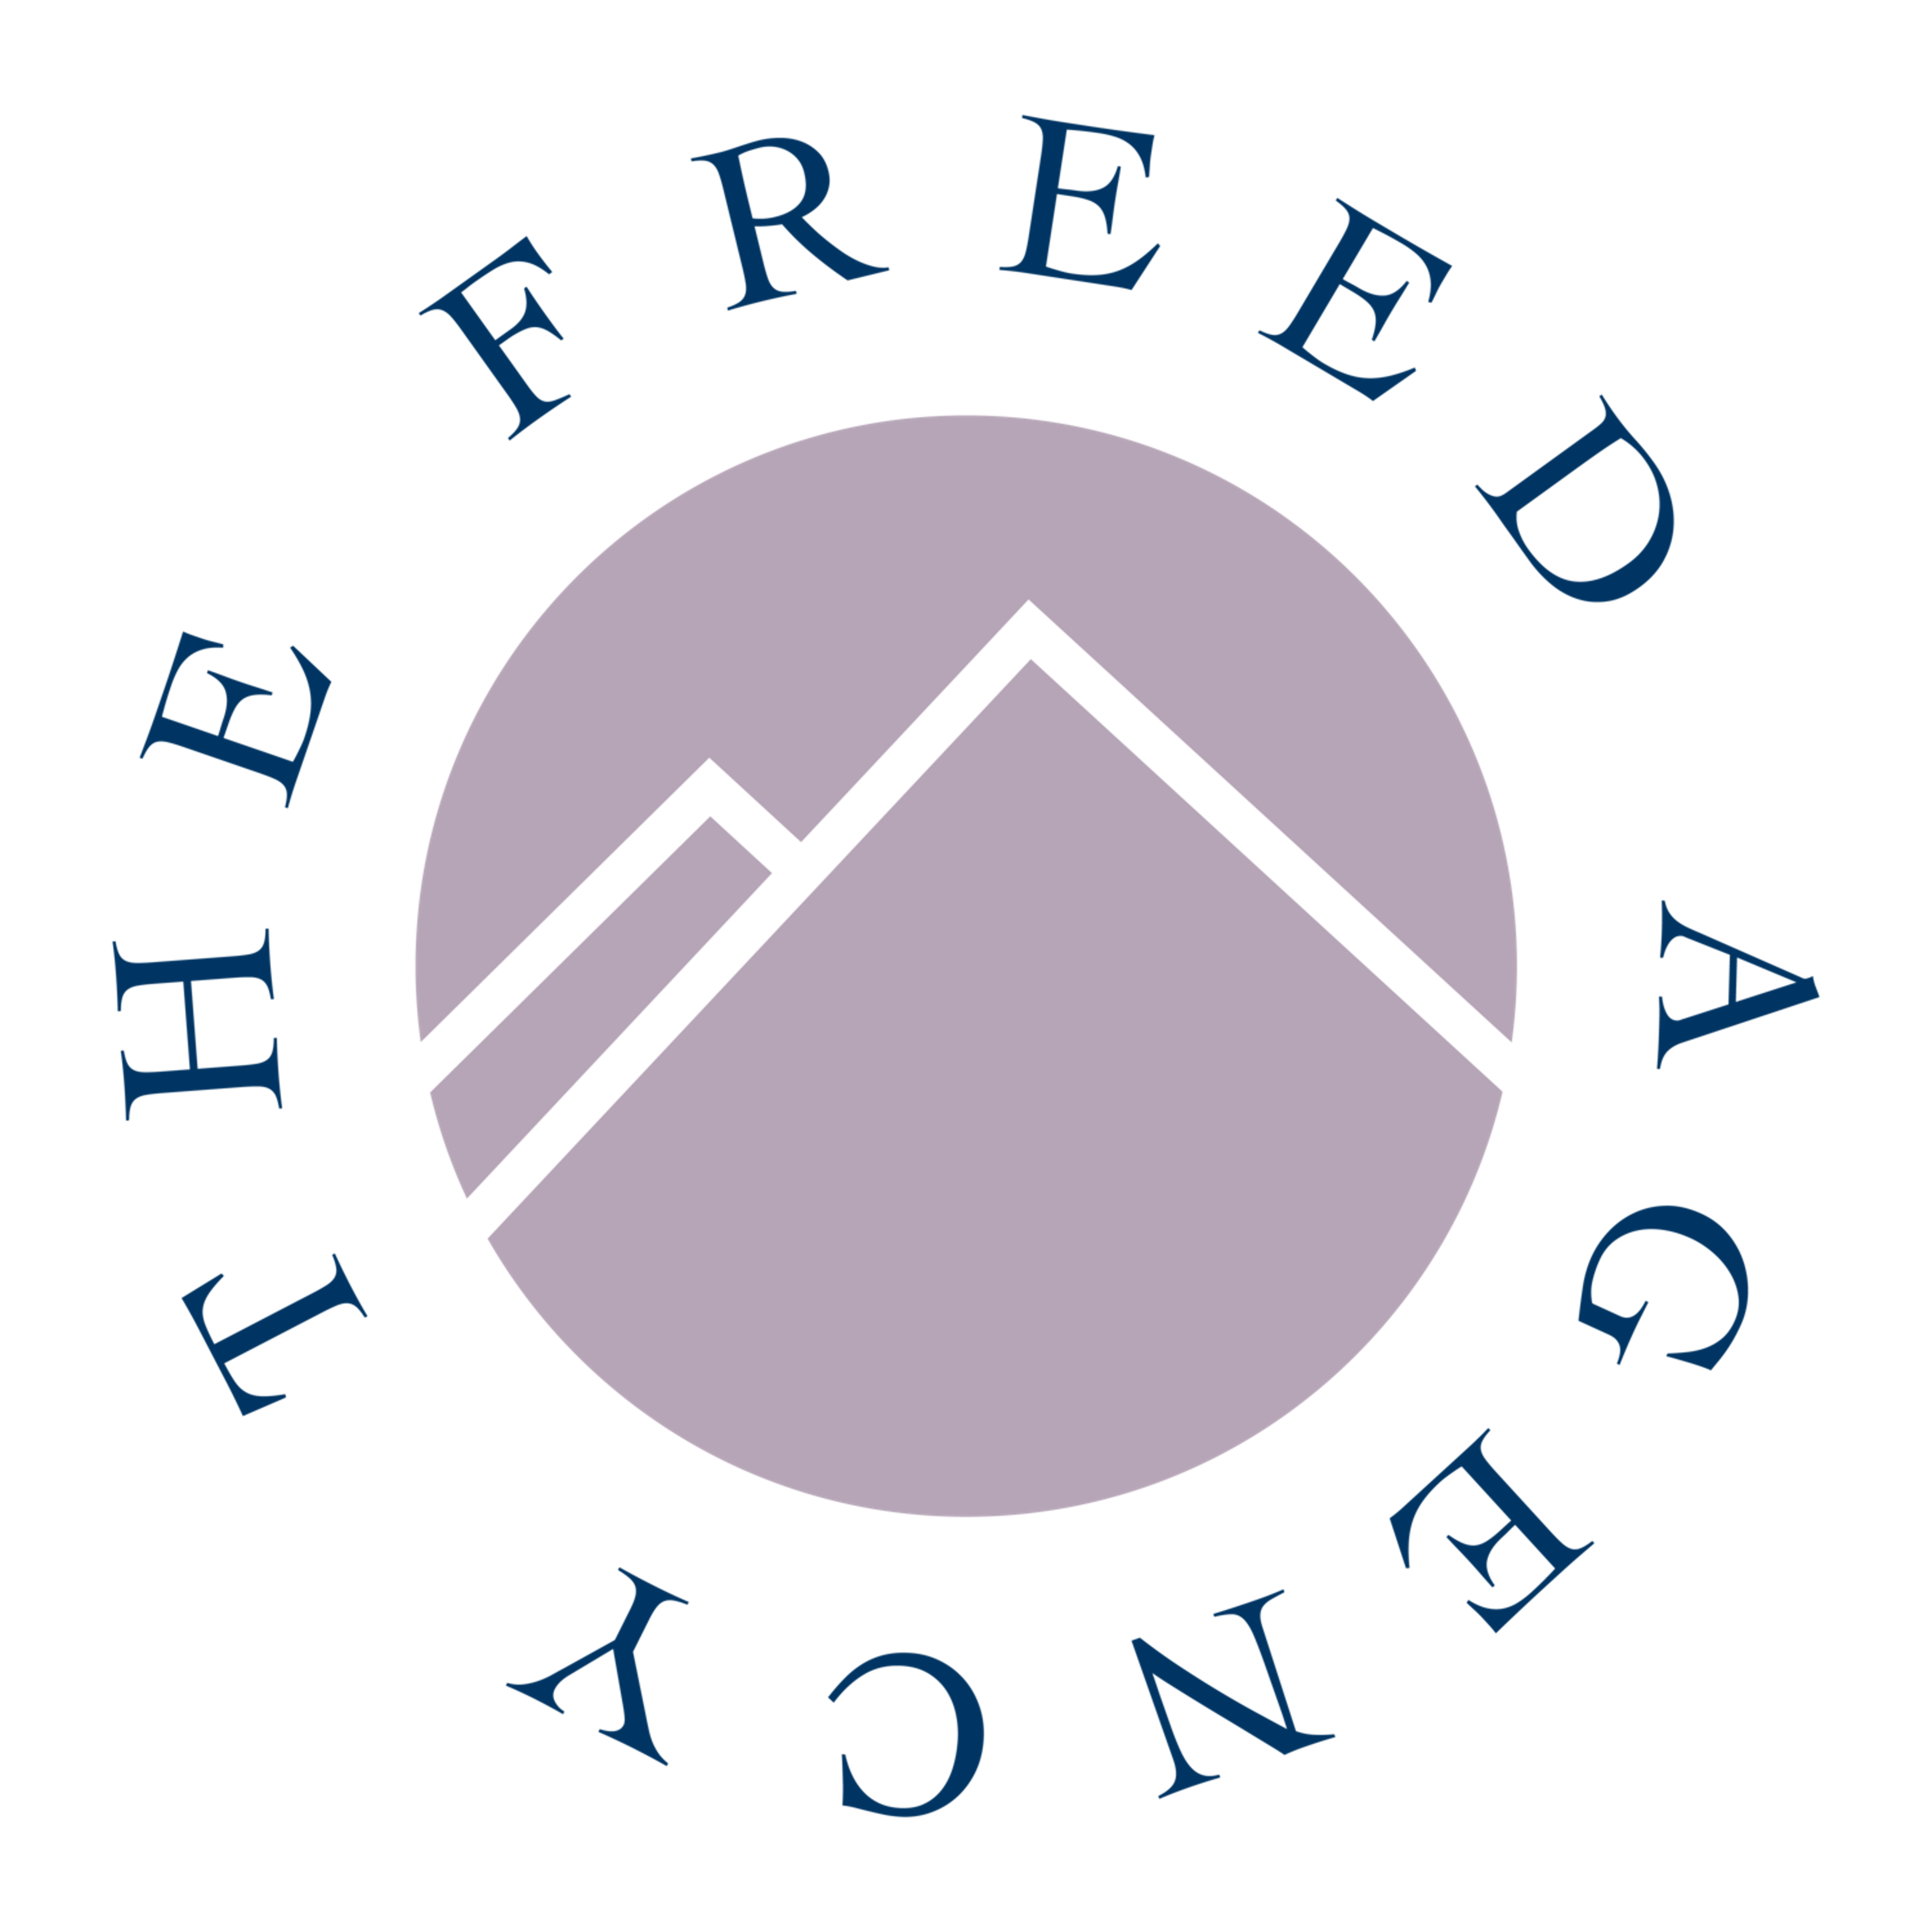 The Freed Agency logo